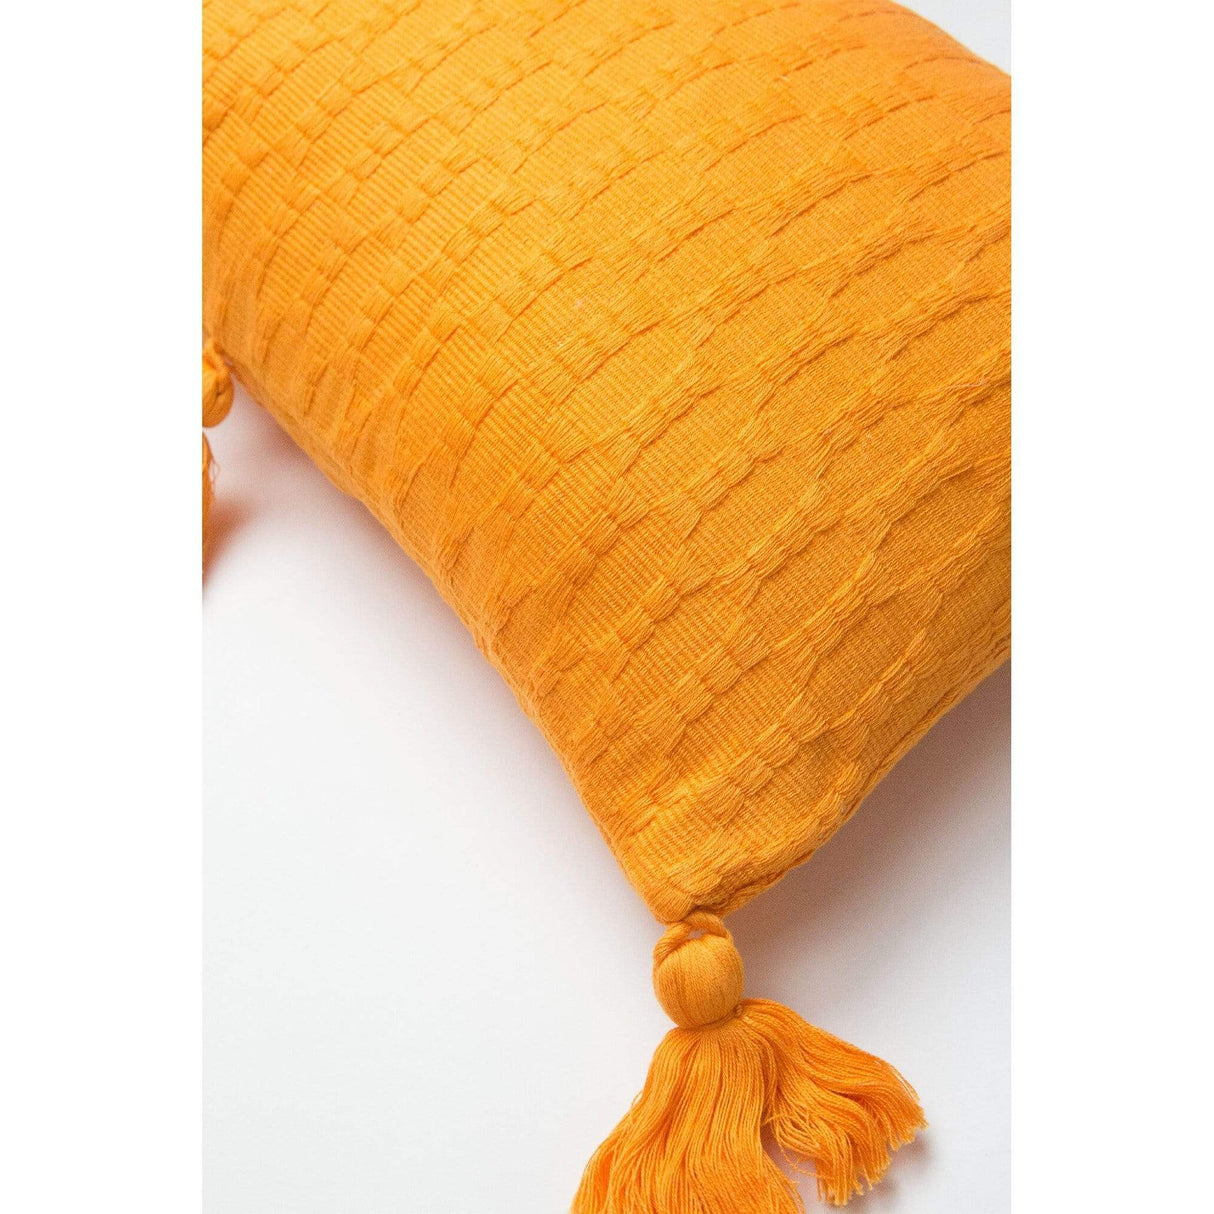 Archive New York Antigua Pillow - Orange Solid Pillow & Decor archive-R1220011-antigua-orange-solid